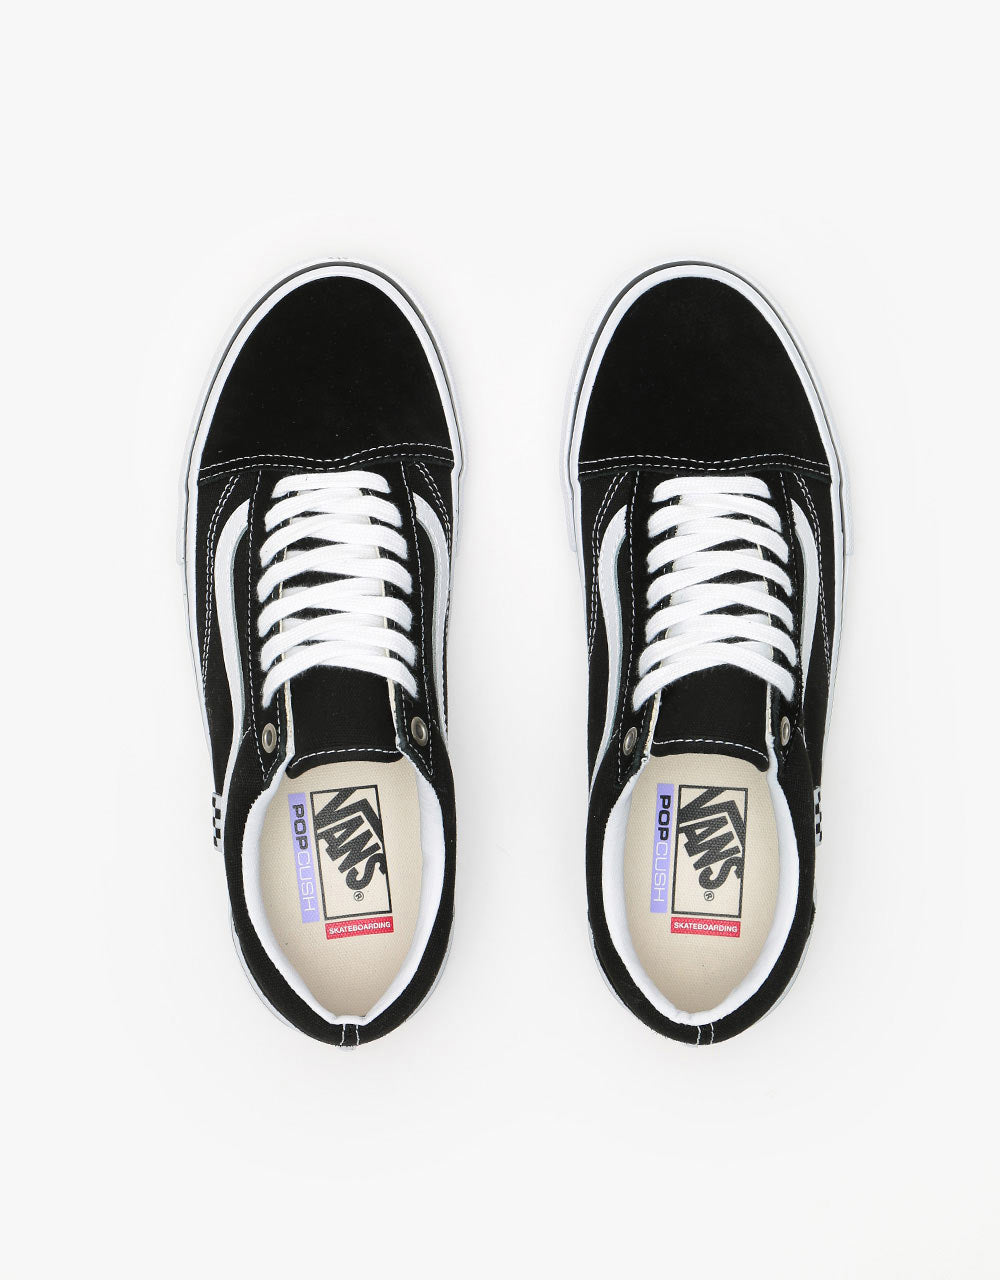 Vans Skate Old Skool Shoes - Black/White